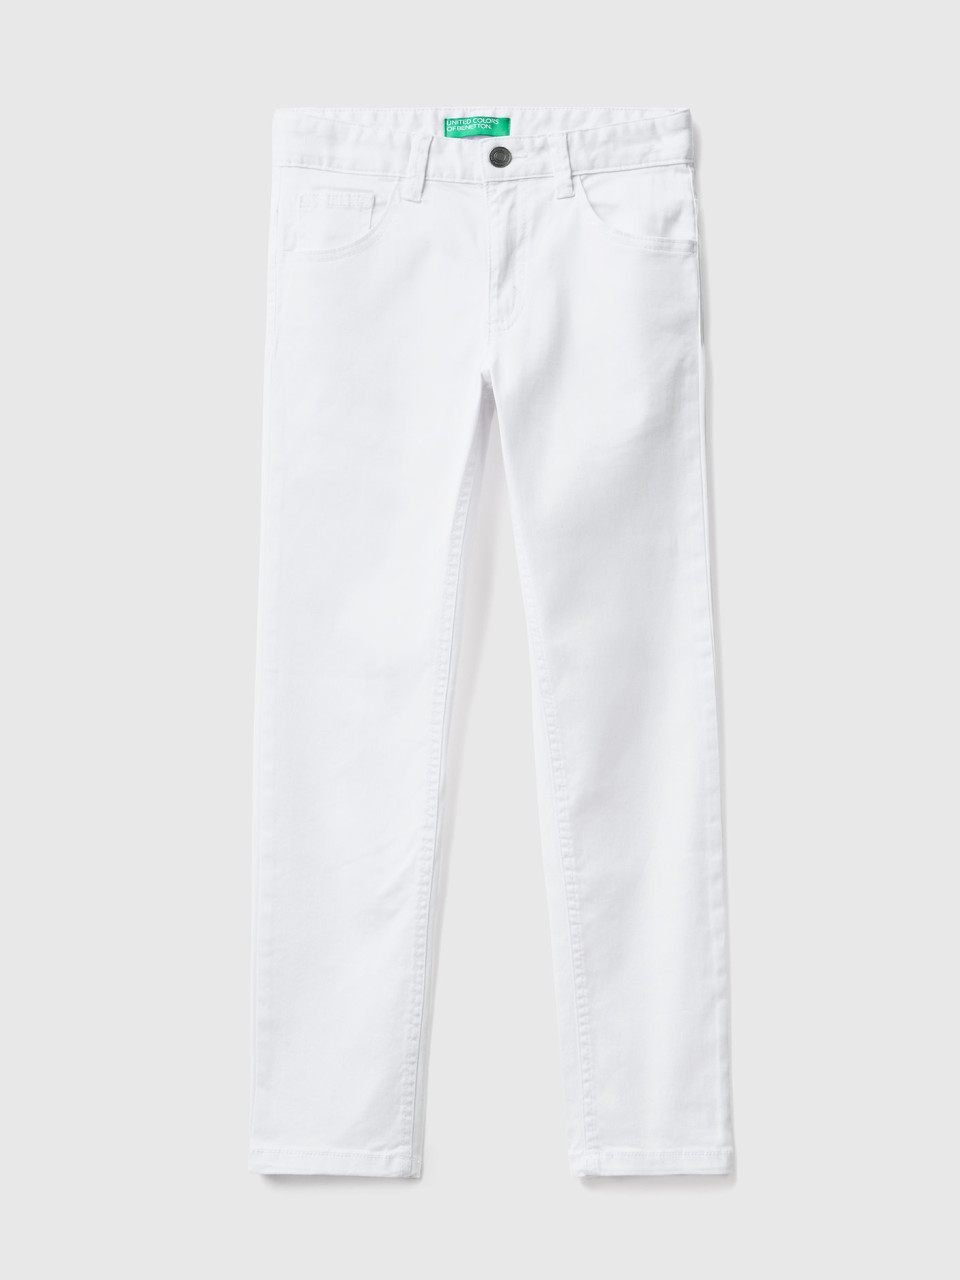 Benetton, Five Pocket Slim Fit Trousers, White, Kids